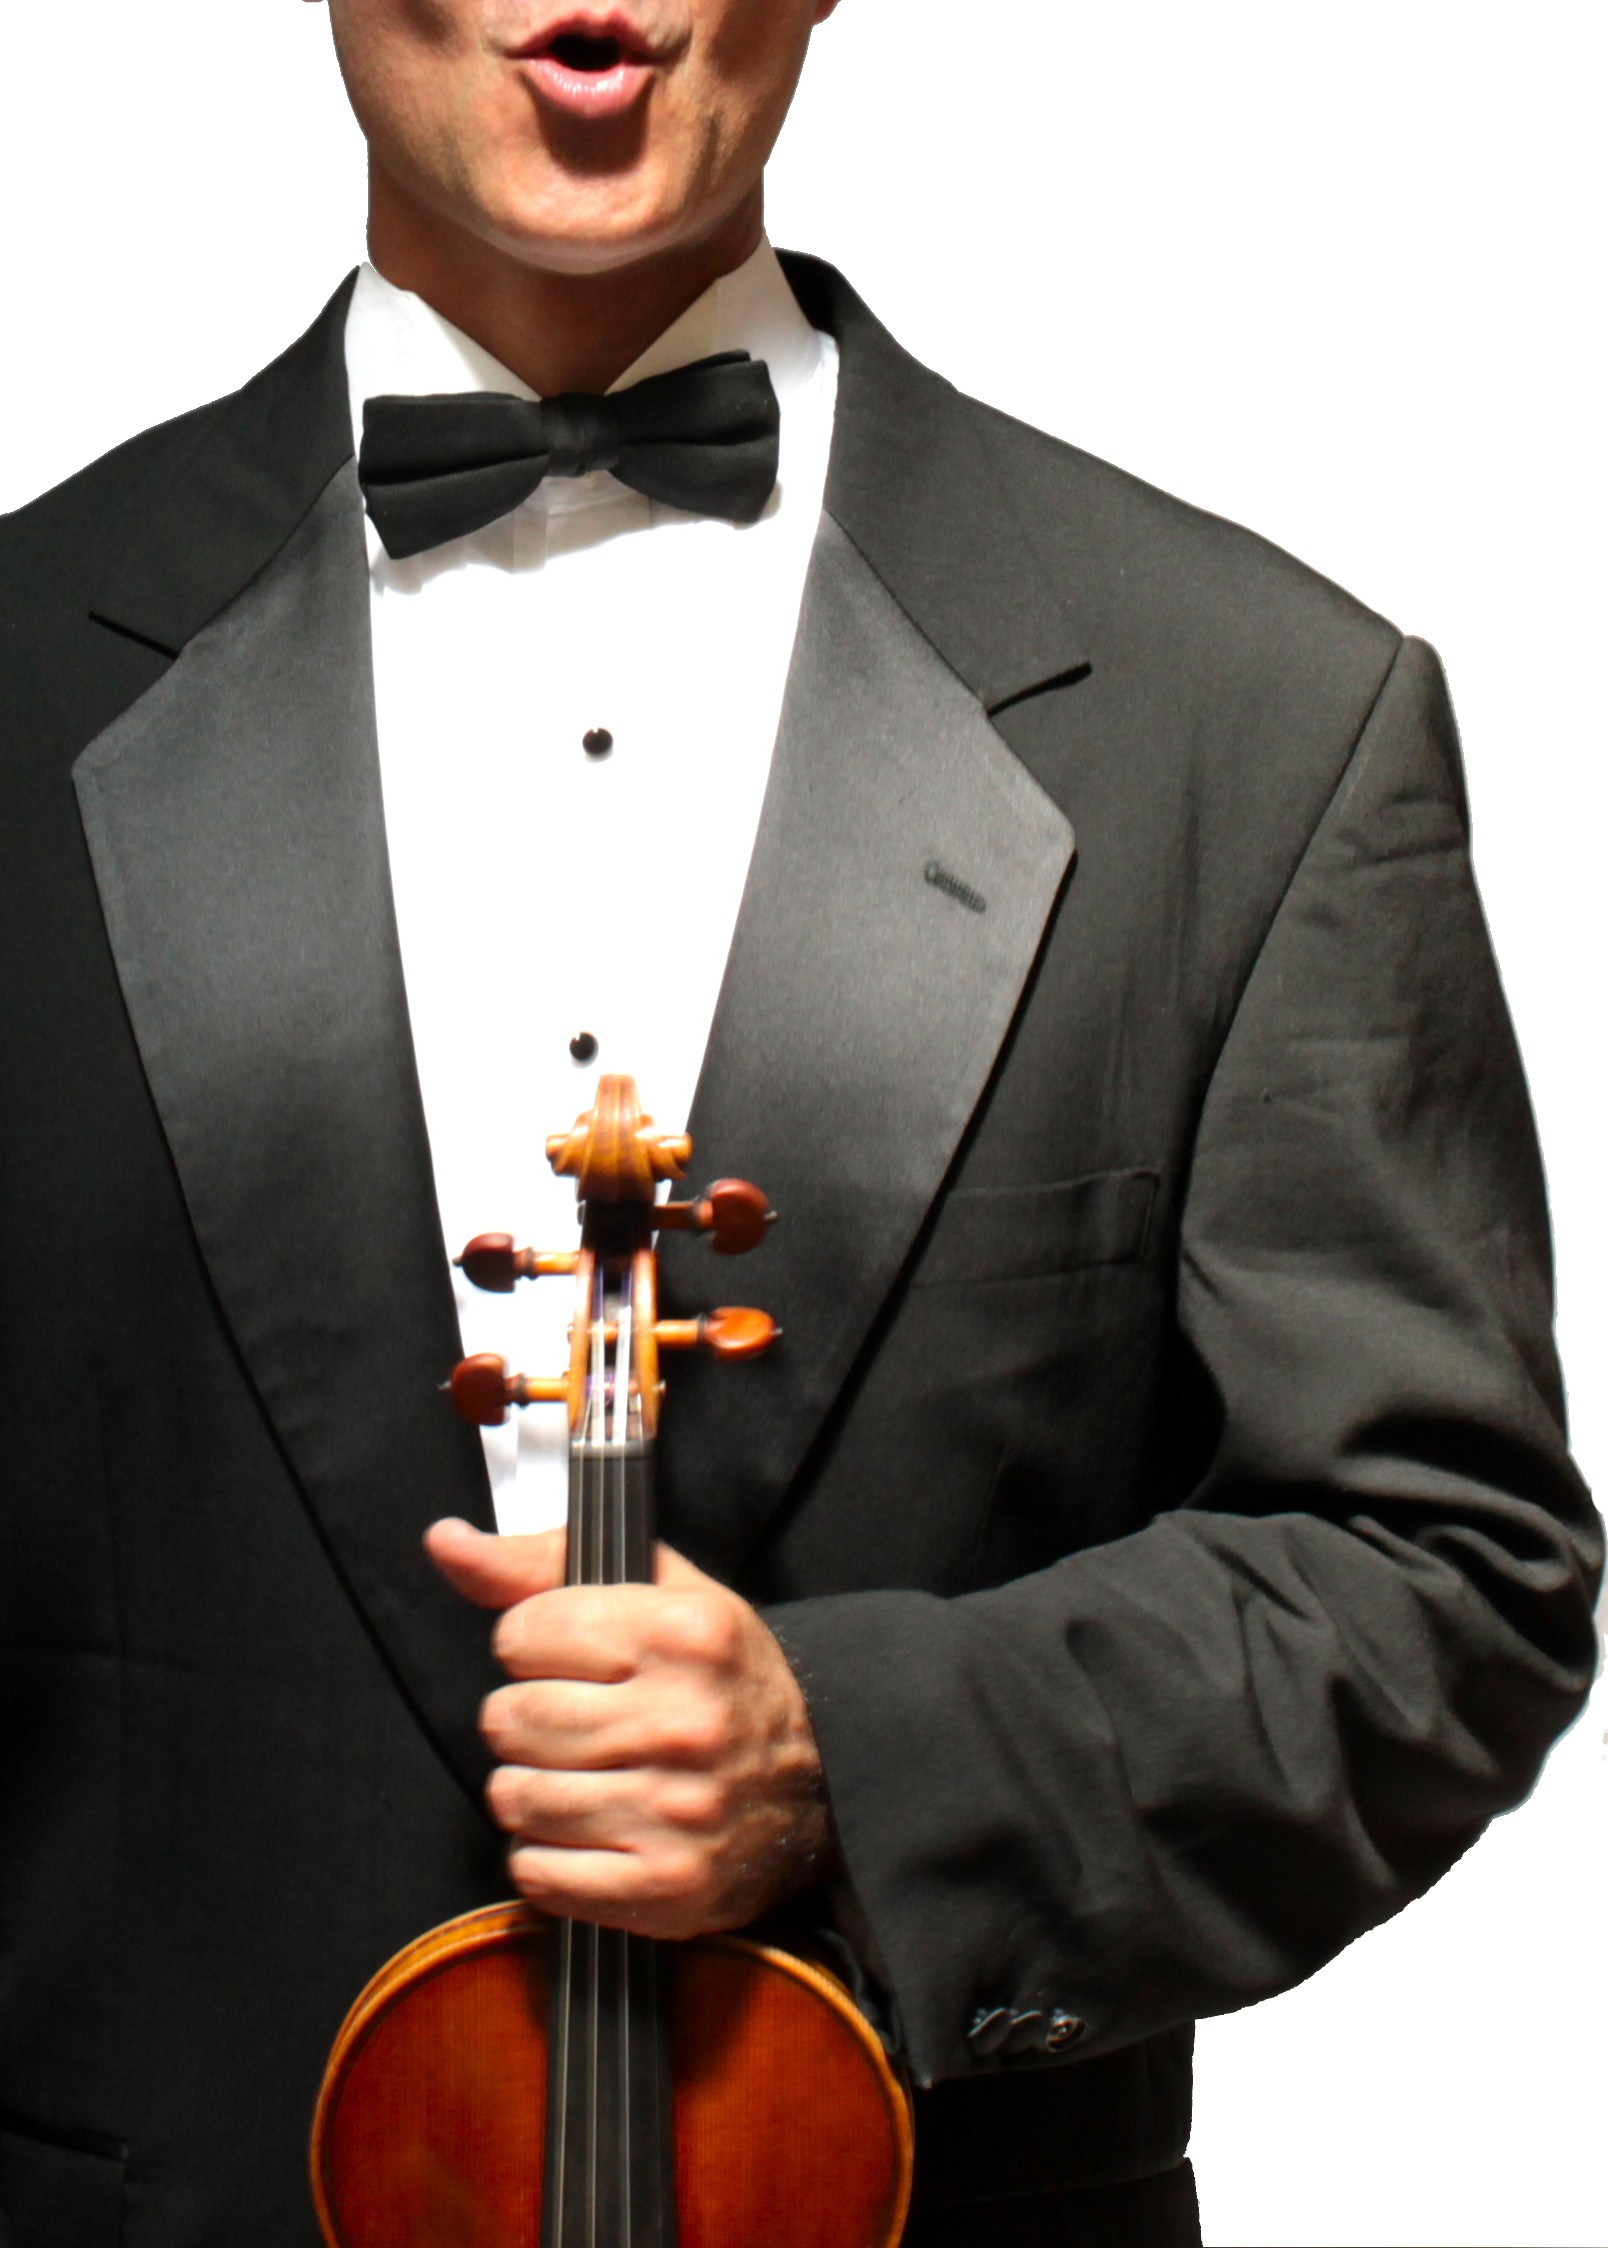 man in tuxedo holding a violin | torbakhopper  -  Foter  -  CC BY